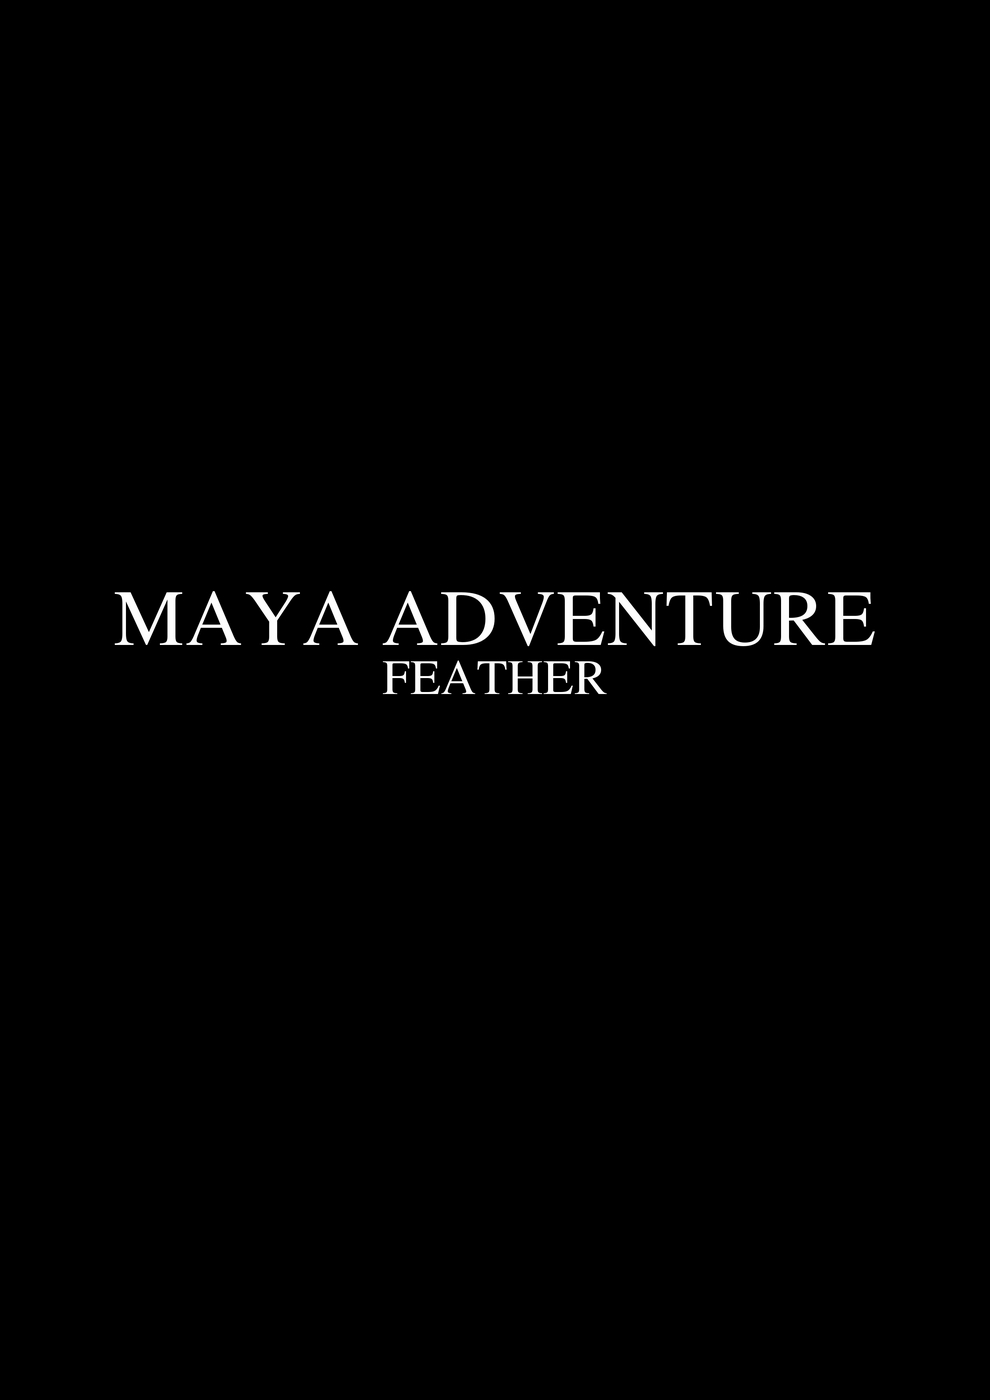 Feather - Maya Adventure